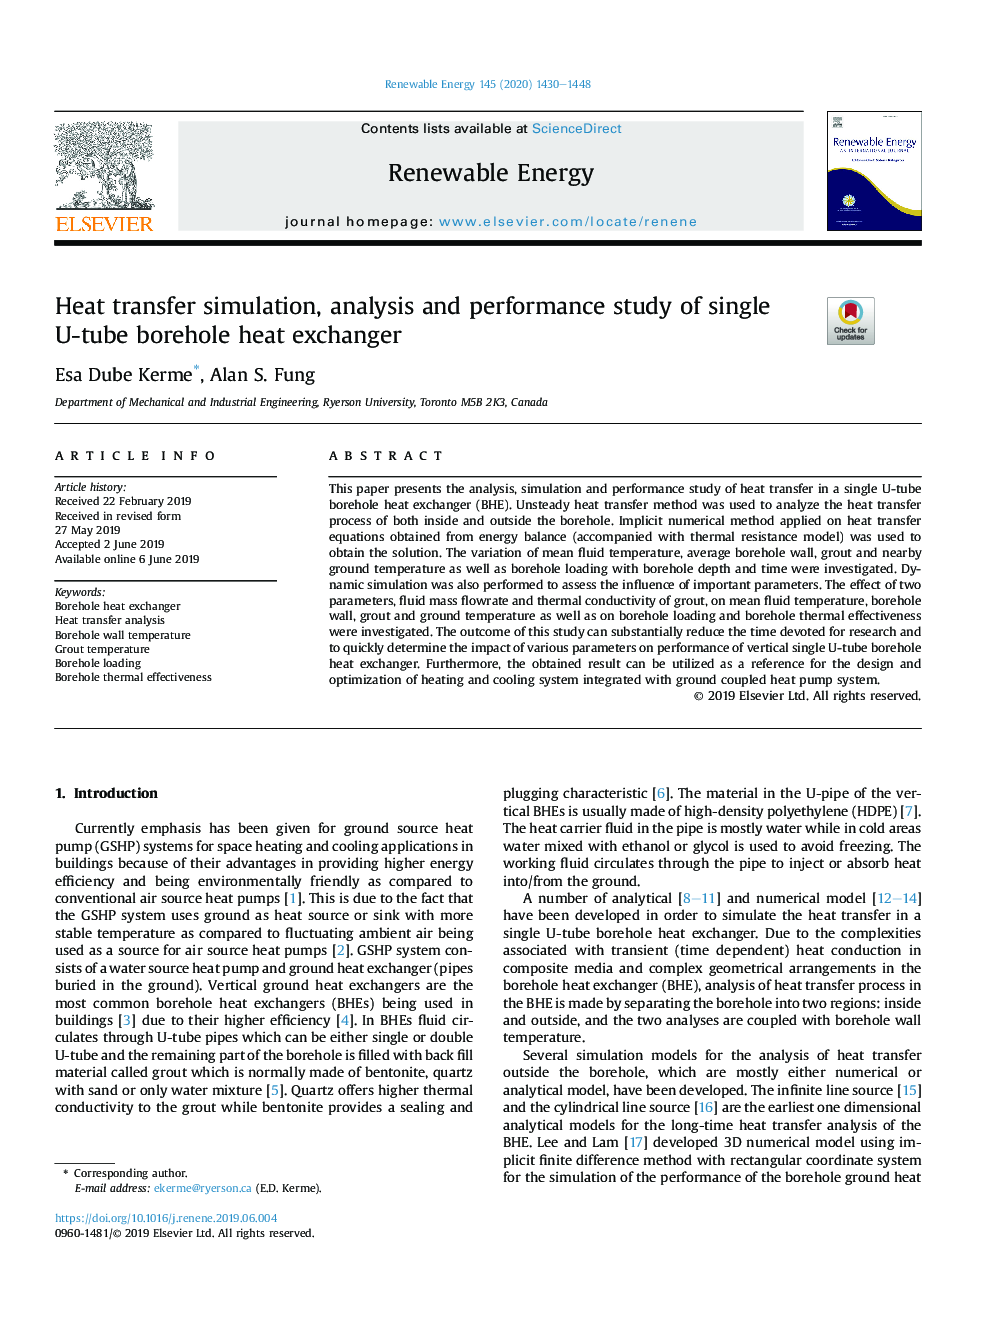 Heat transfer simulation, analysis and performance study of single U-tube borehole heat exchanger